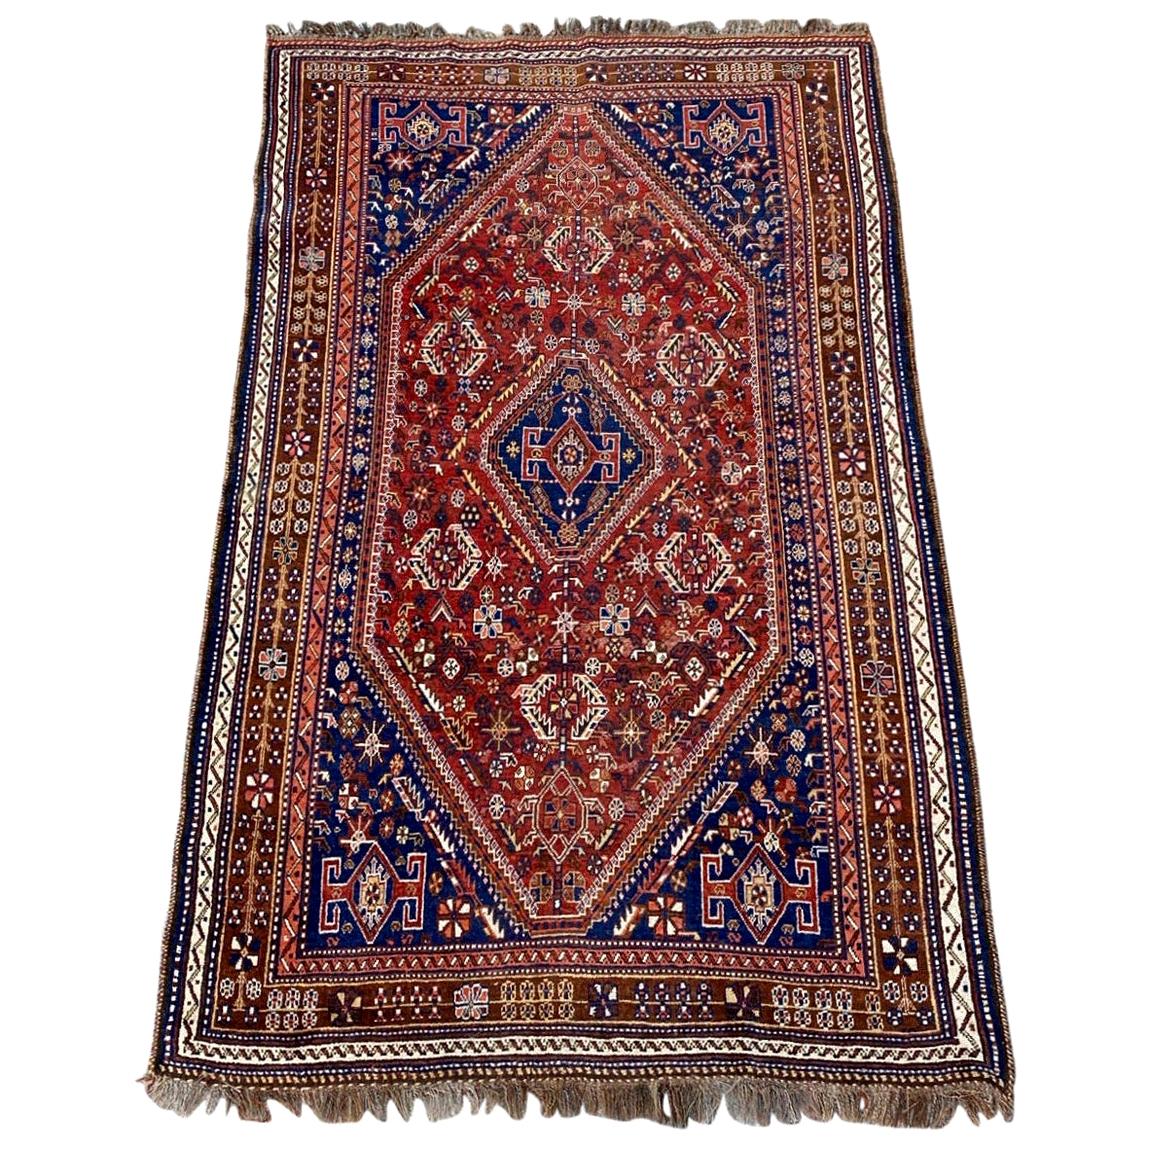 Bobyrug’s Nice Antique Shiraz Rug For Sale